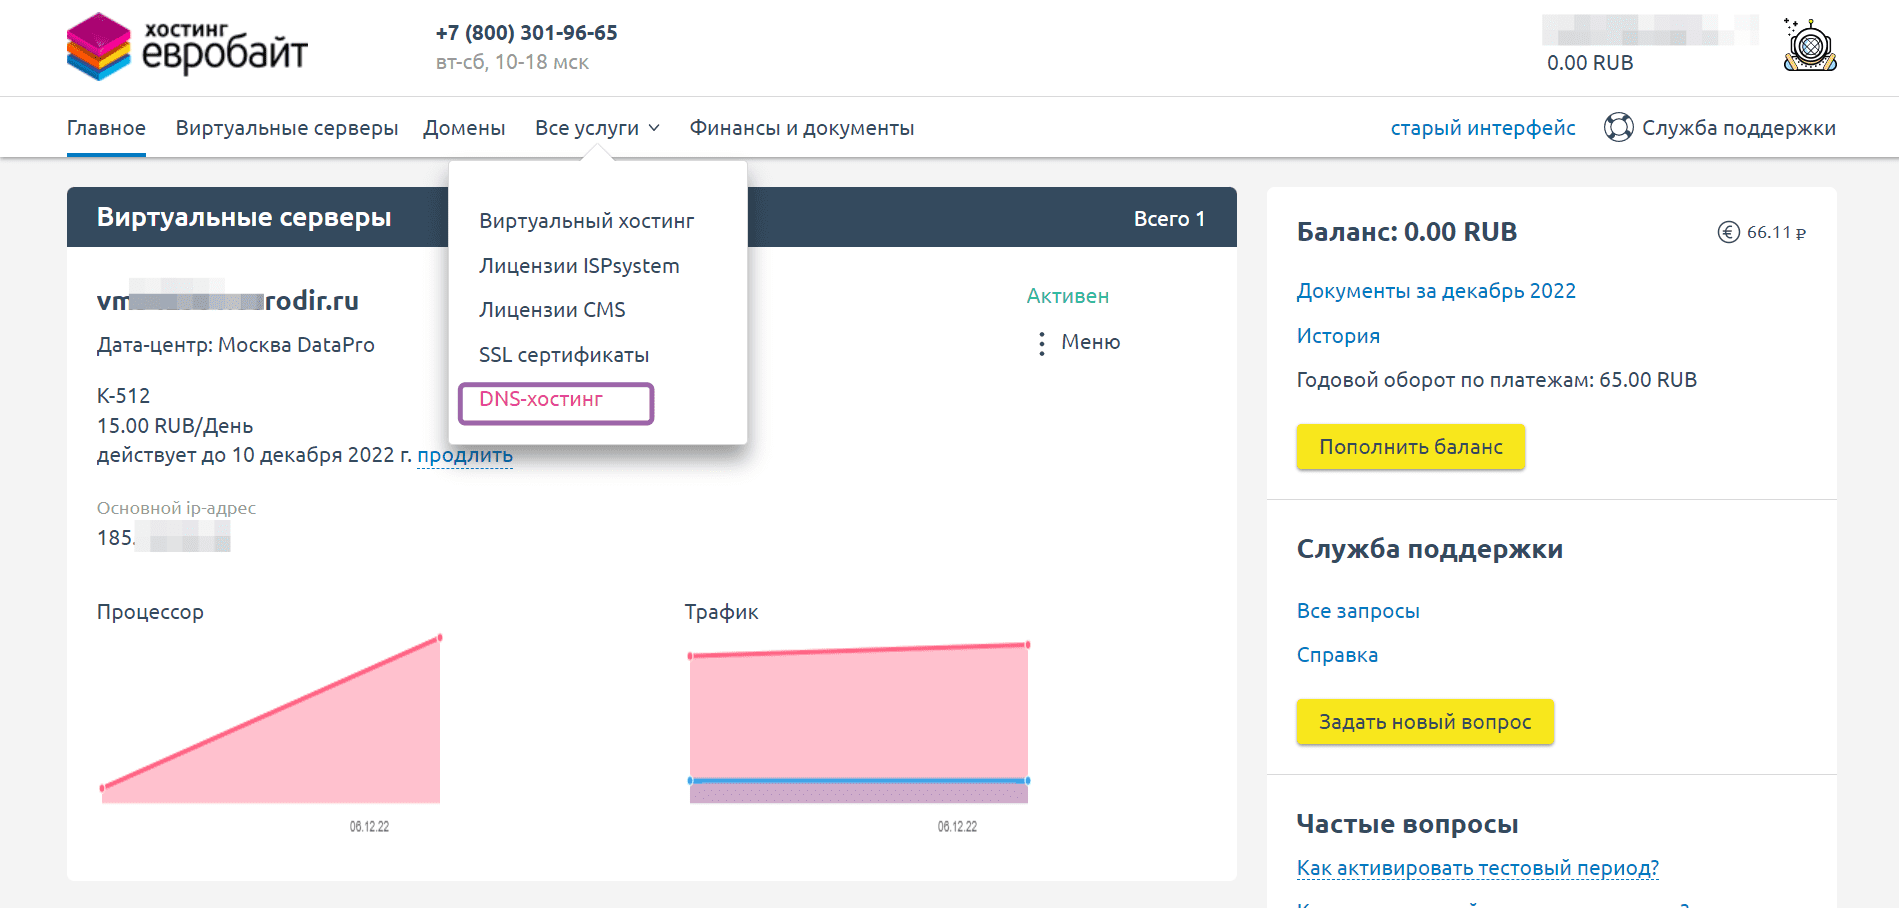 DNS-хостинг в «Евробайт».